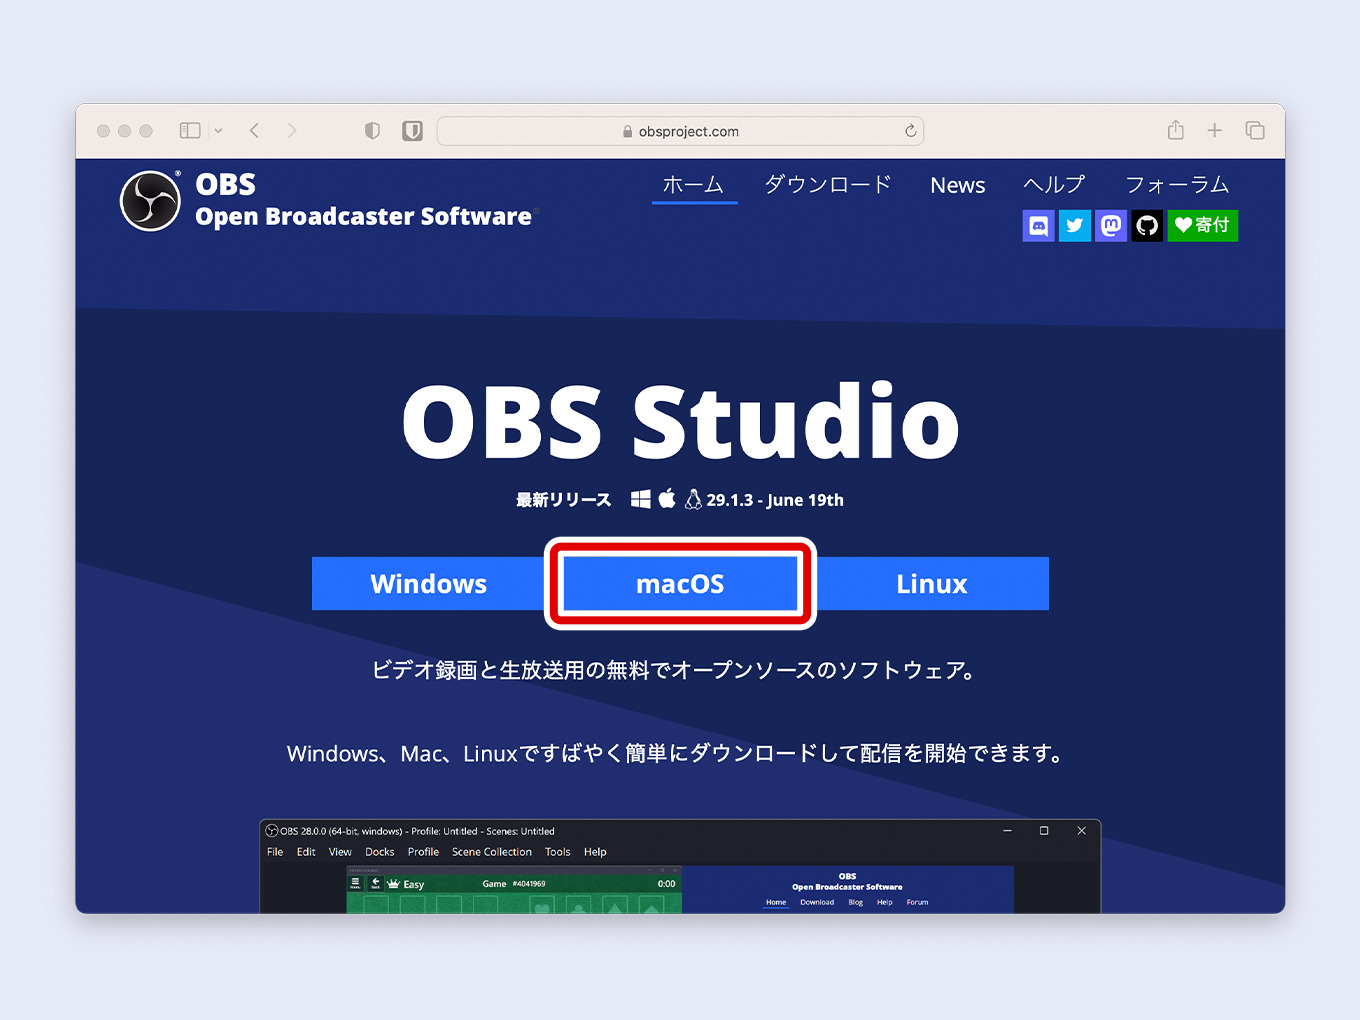 OBS公式サイトの「MacOS」をクリックする